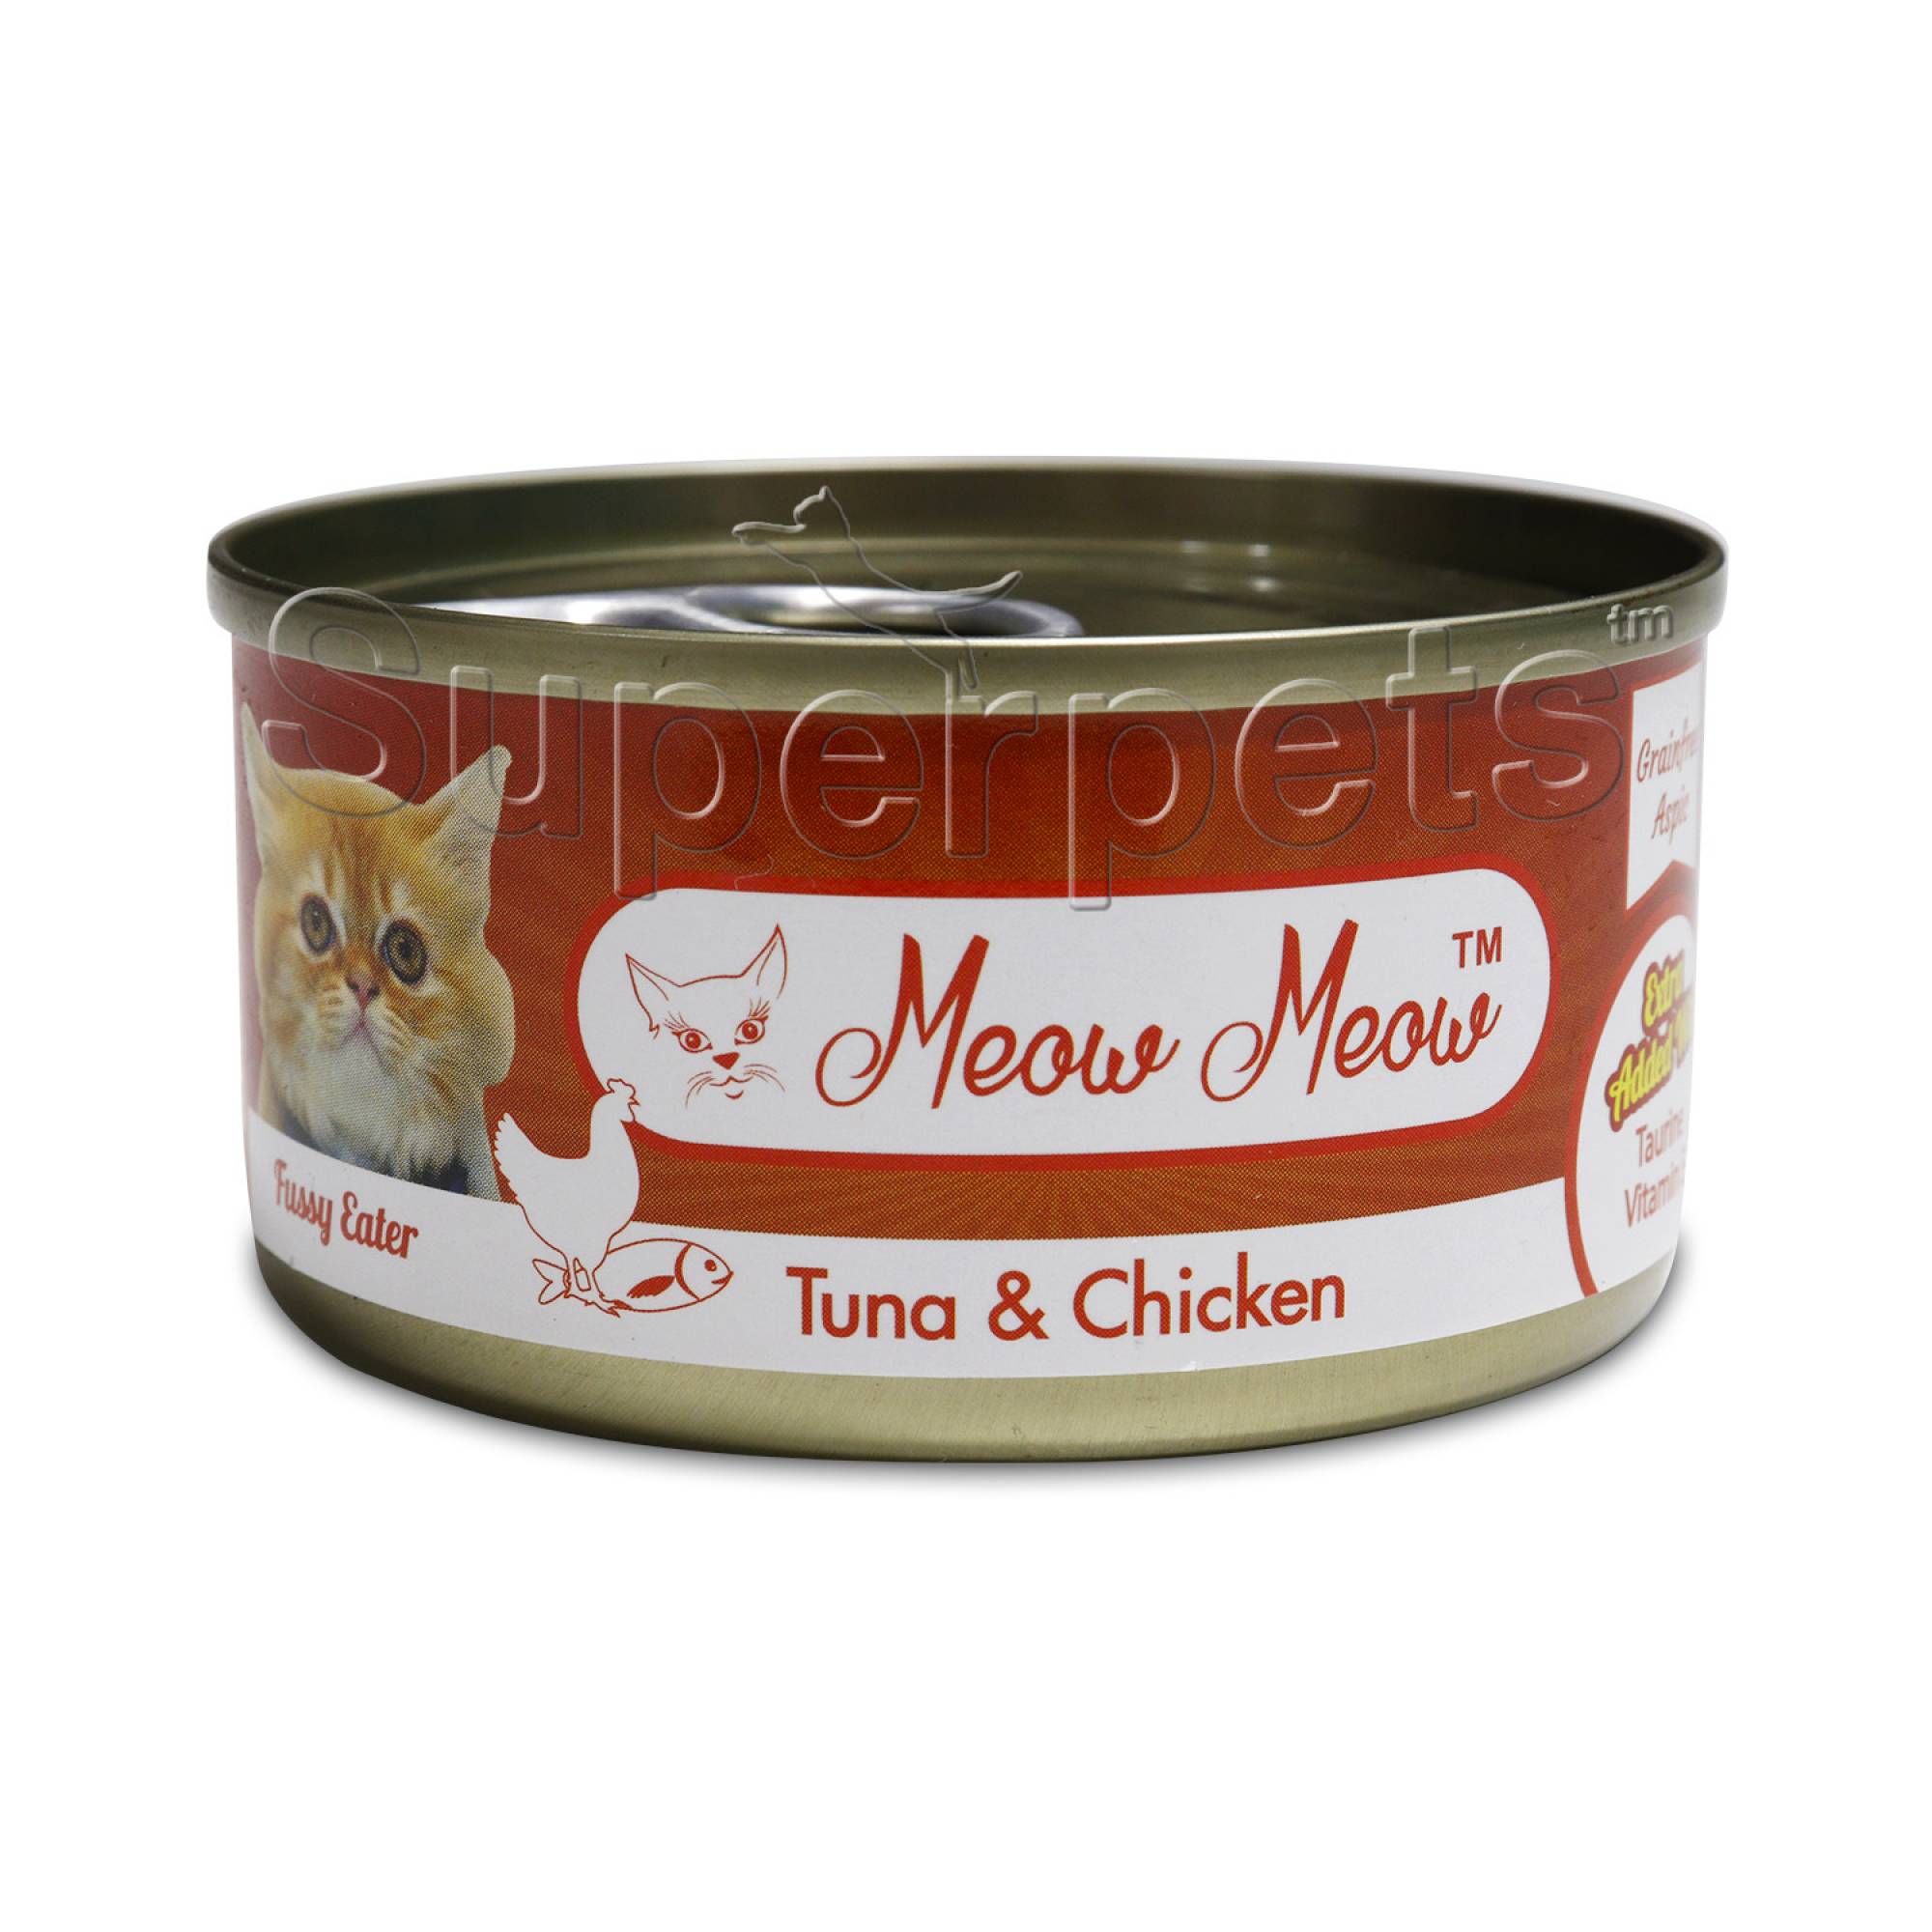 Meow Meow - Tuna & Chicken - Grain Free 80g x 24pcs (1 carton)